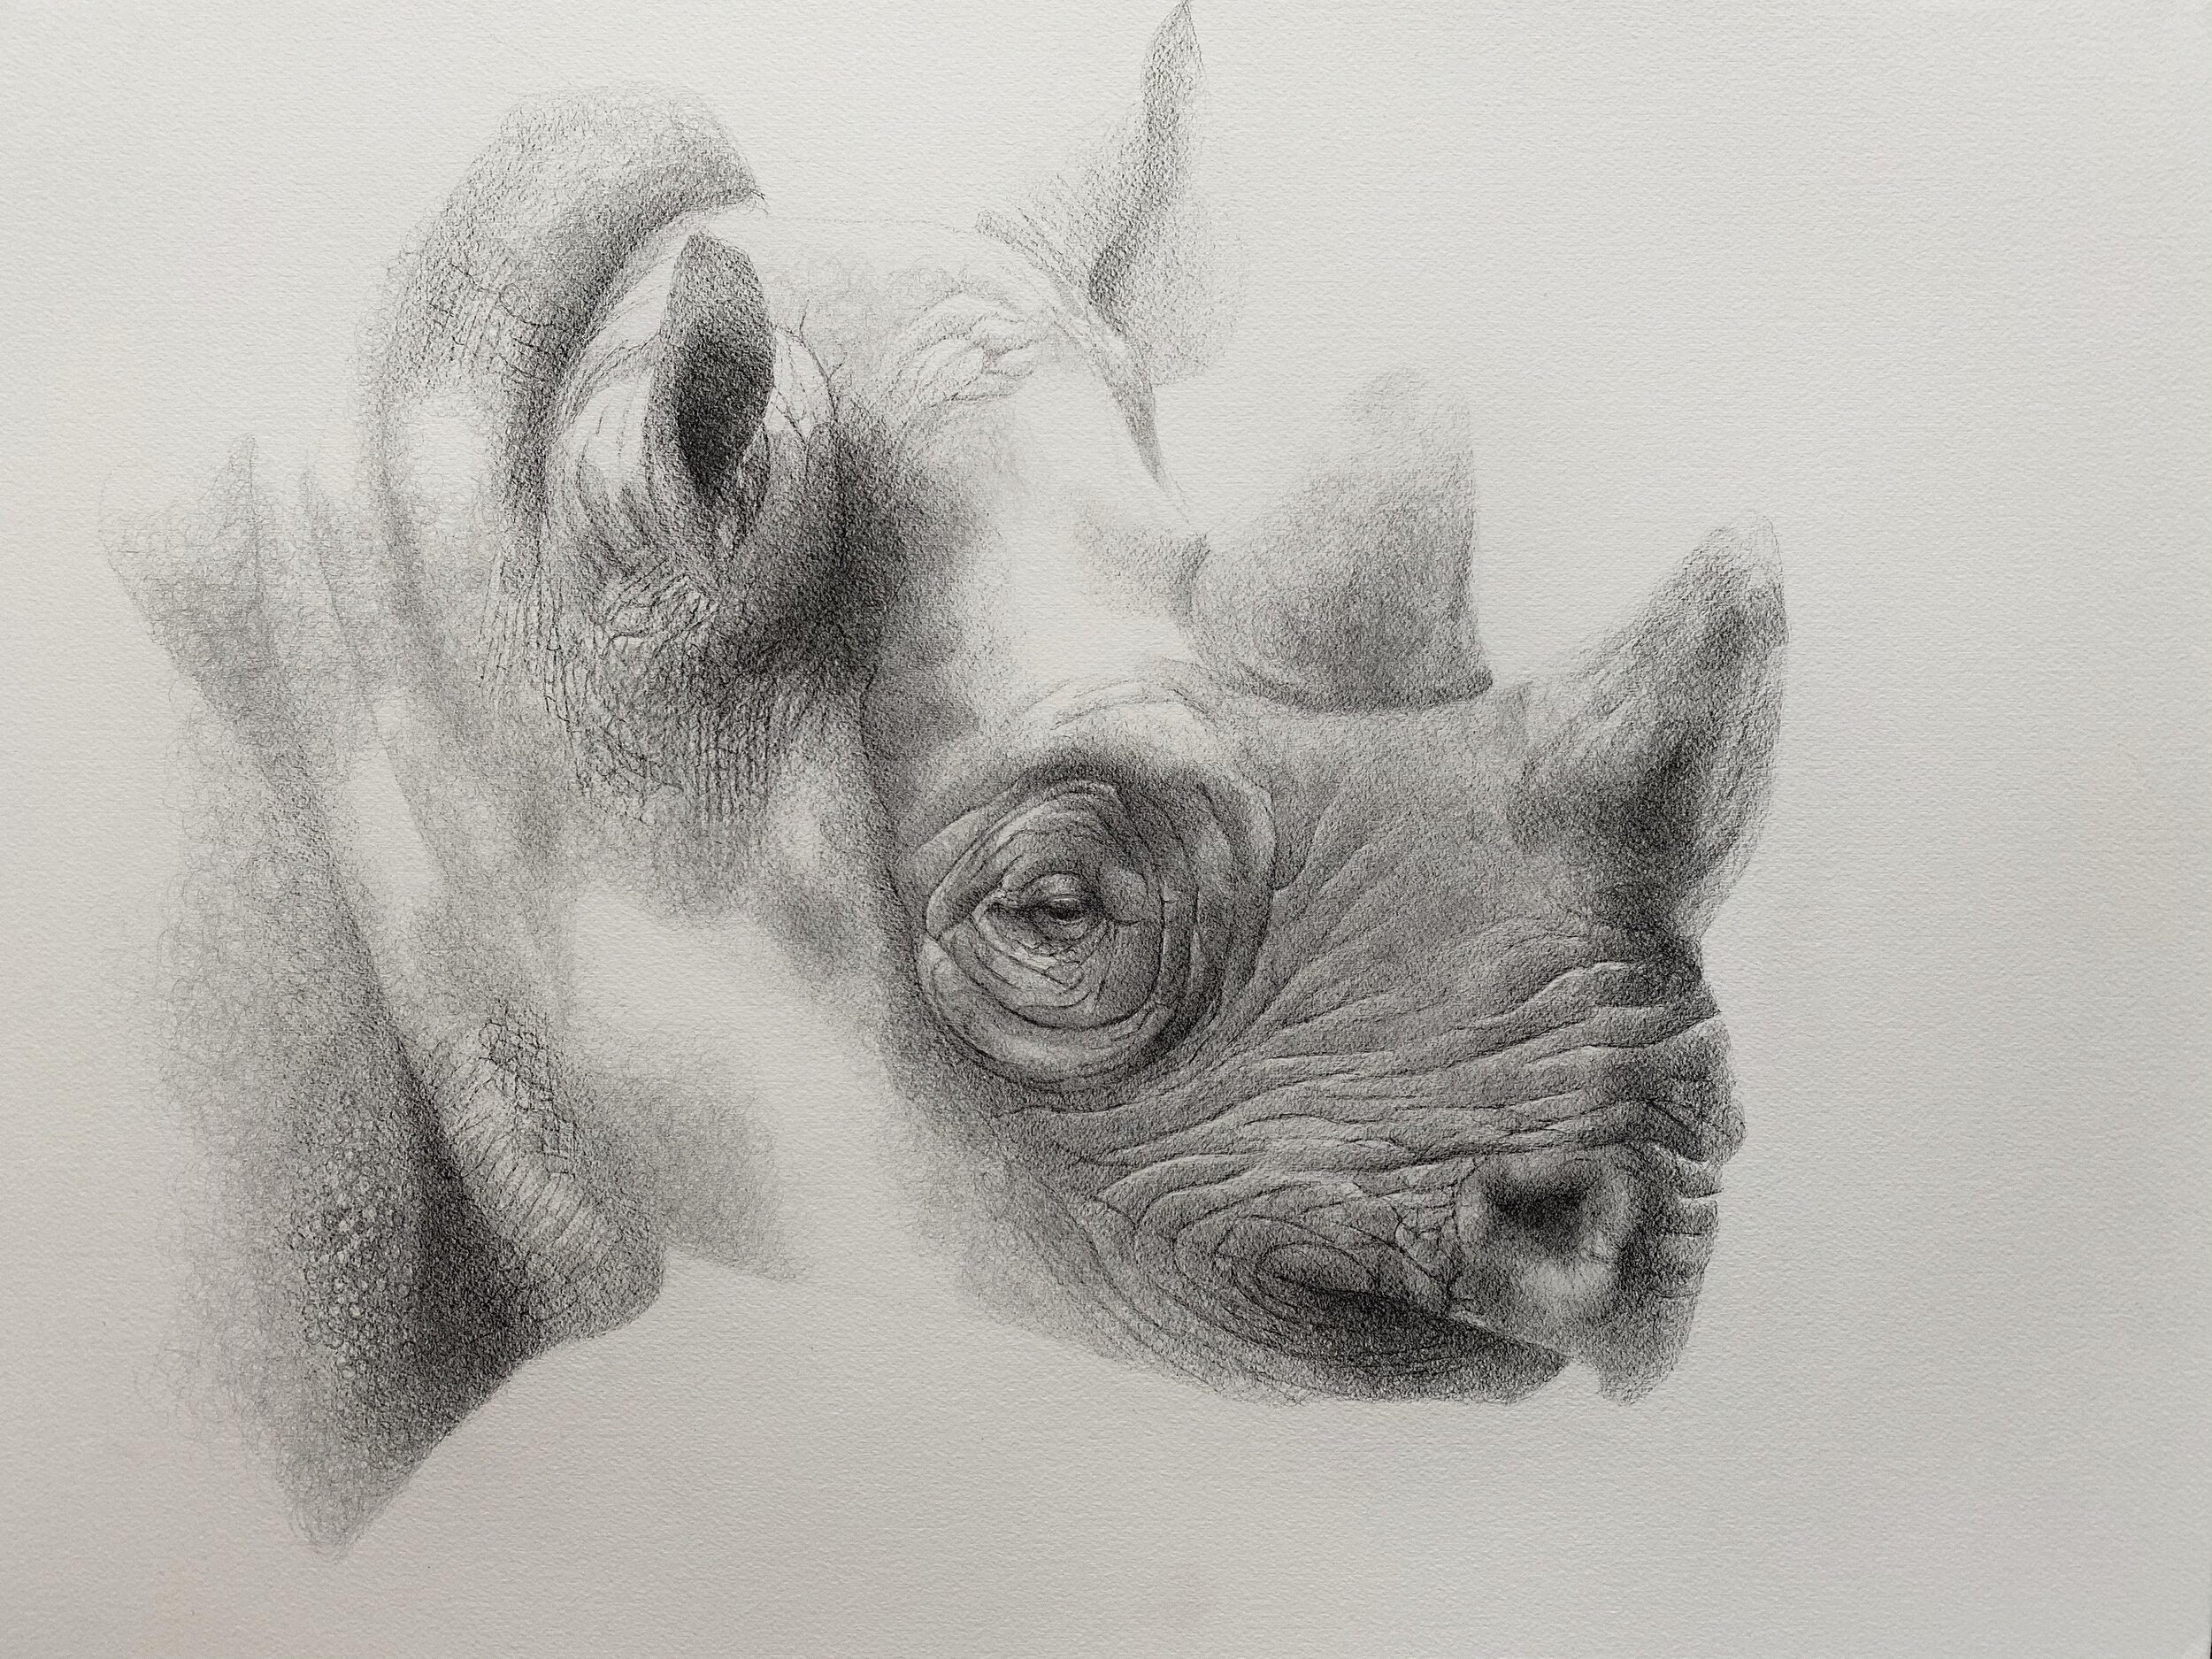   Rhino II   pen on paper  20x24 